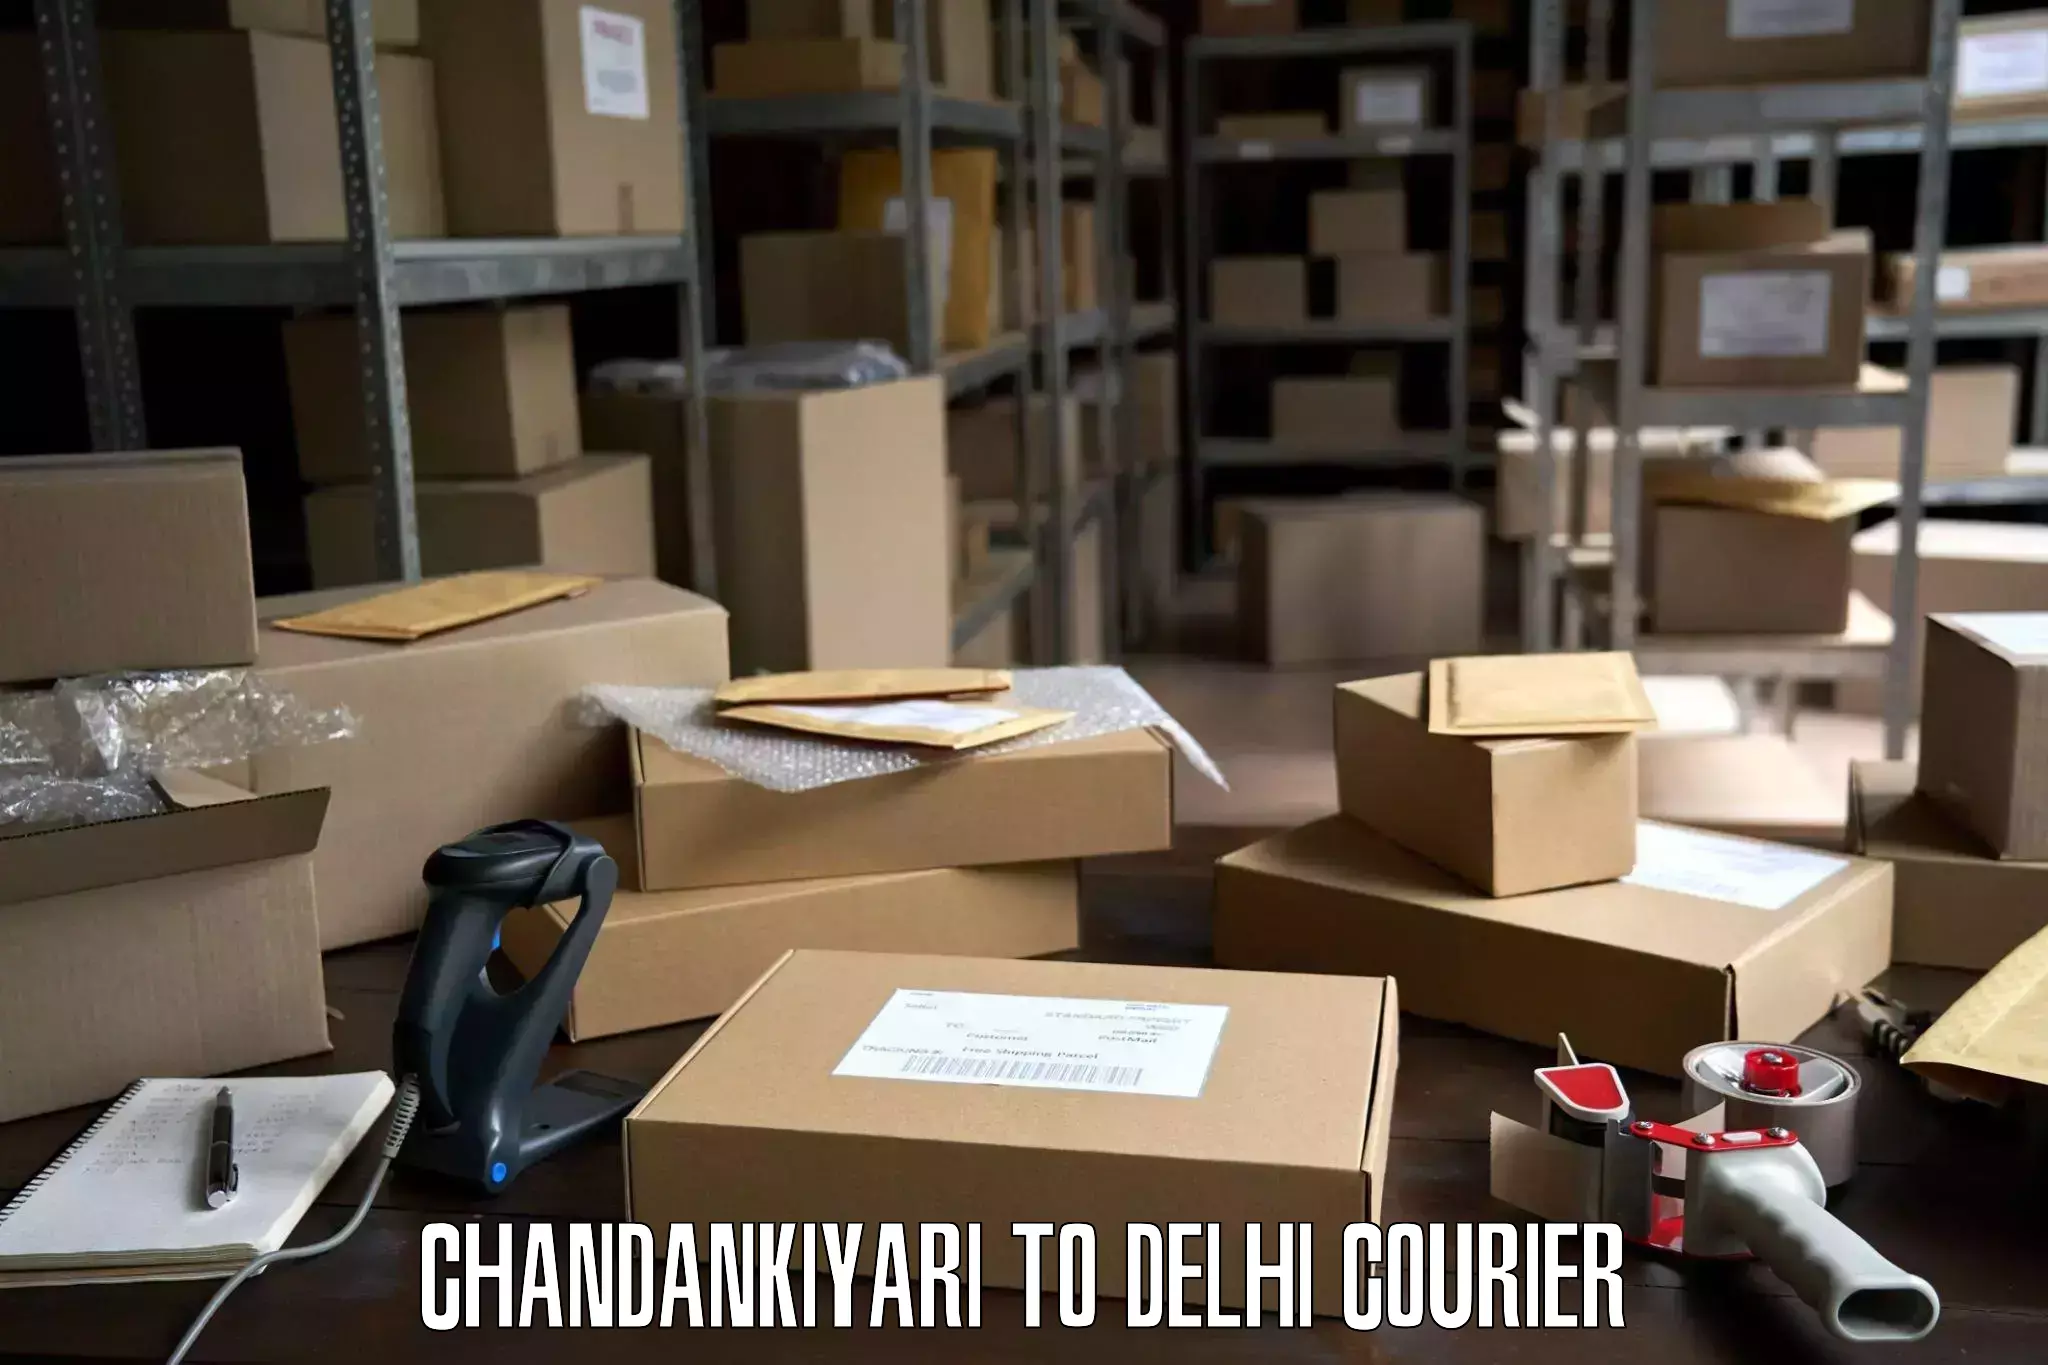 Furniture relocation experts Chandankiyari to Delhi